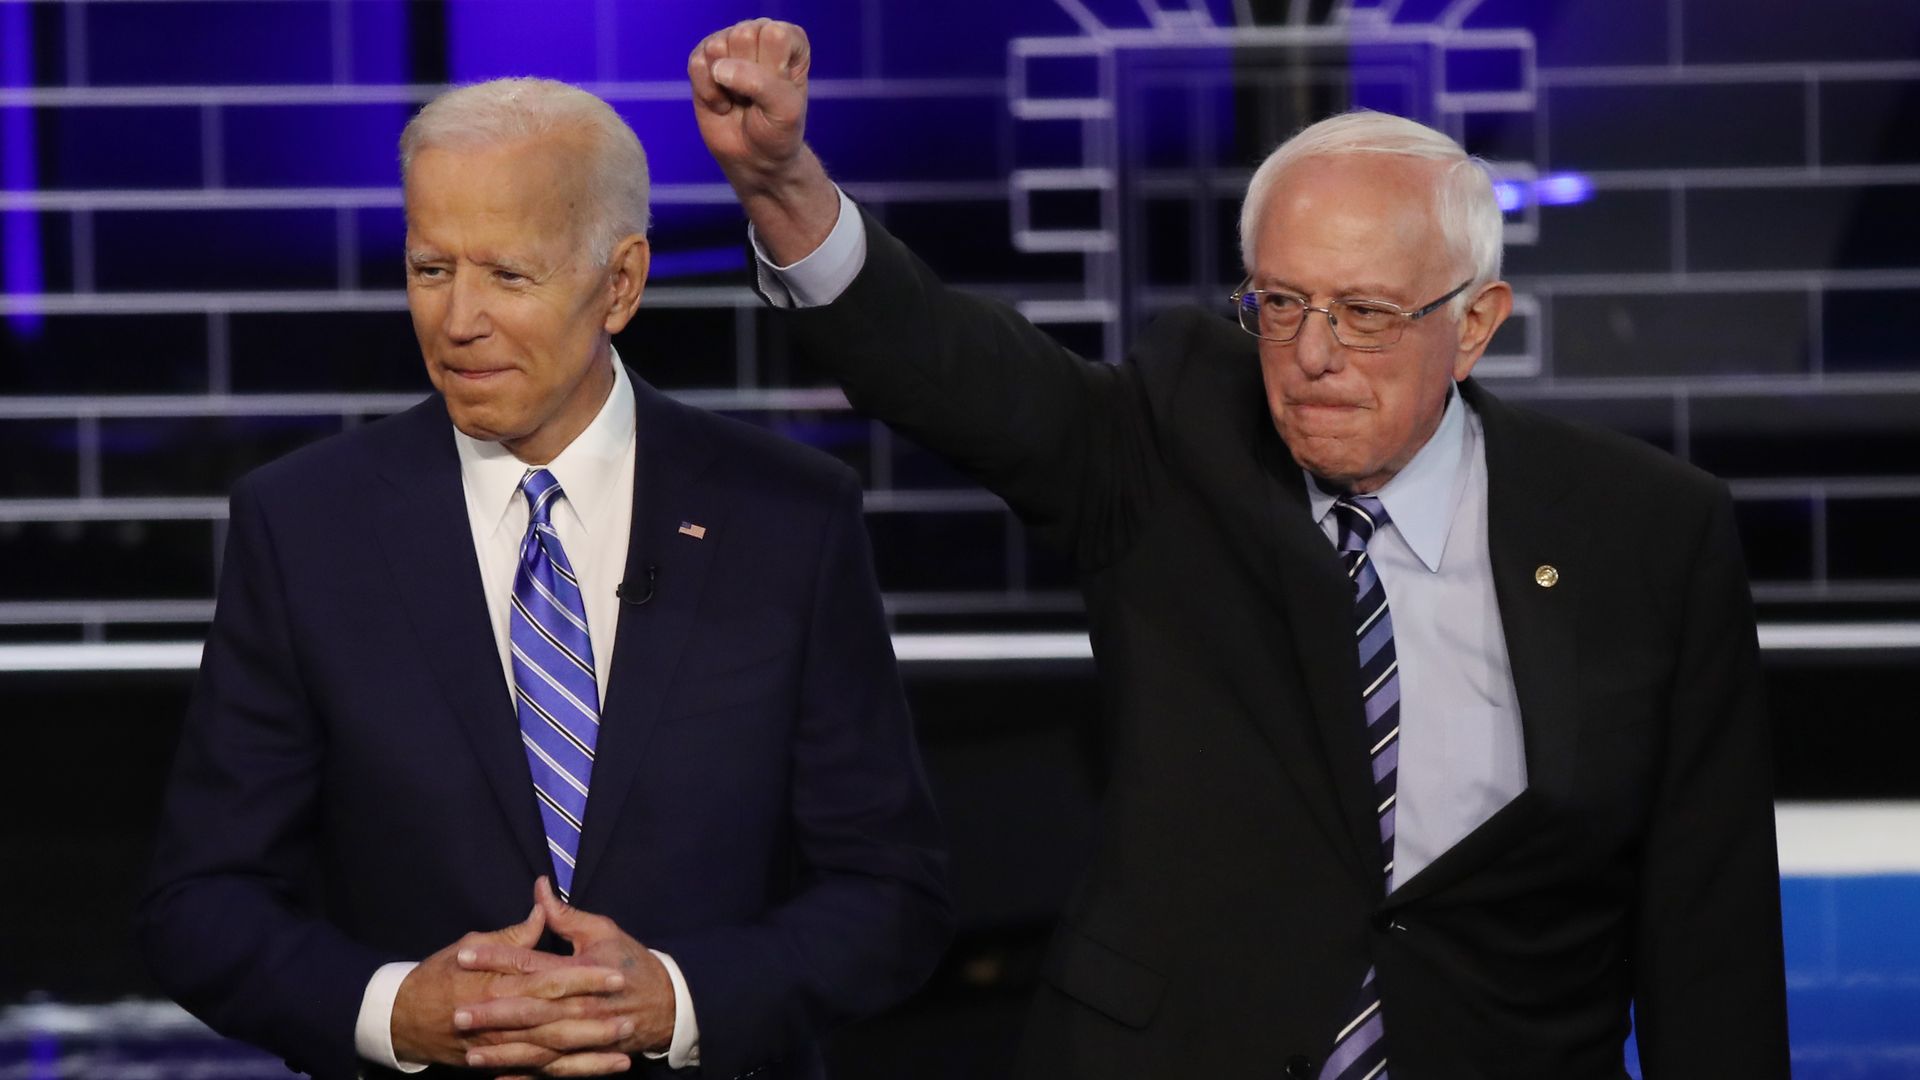 Then-former Vice President Biden and Sen. Bernie Sanders during a Democratic presidential debate in June 2019 in Miami, Florida.